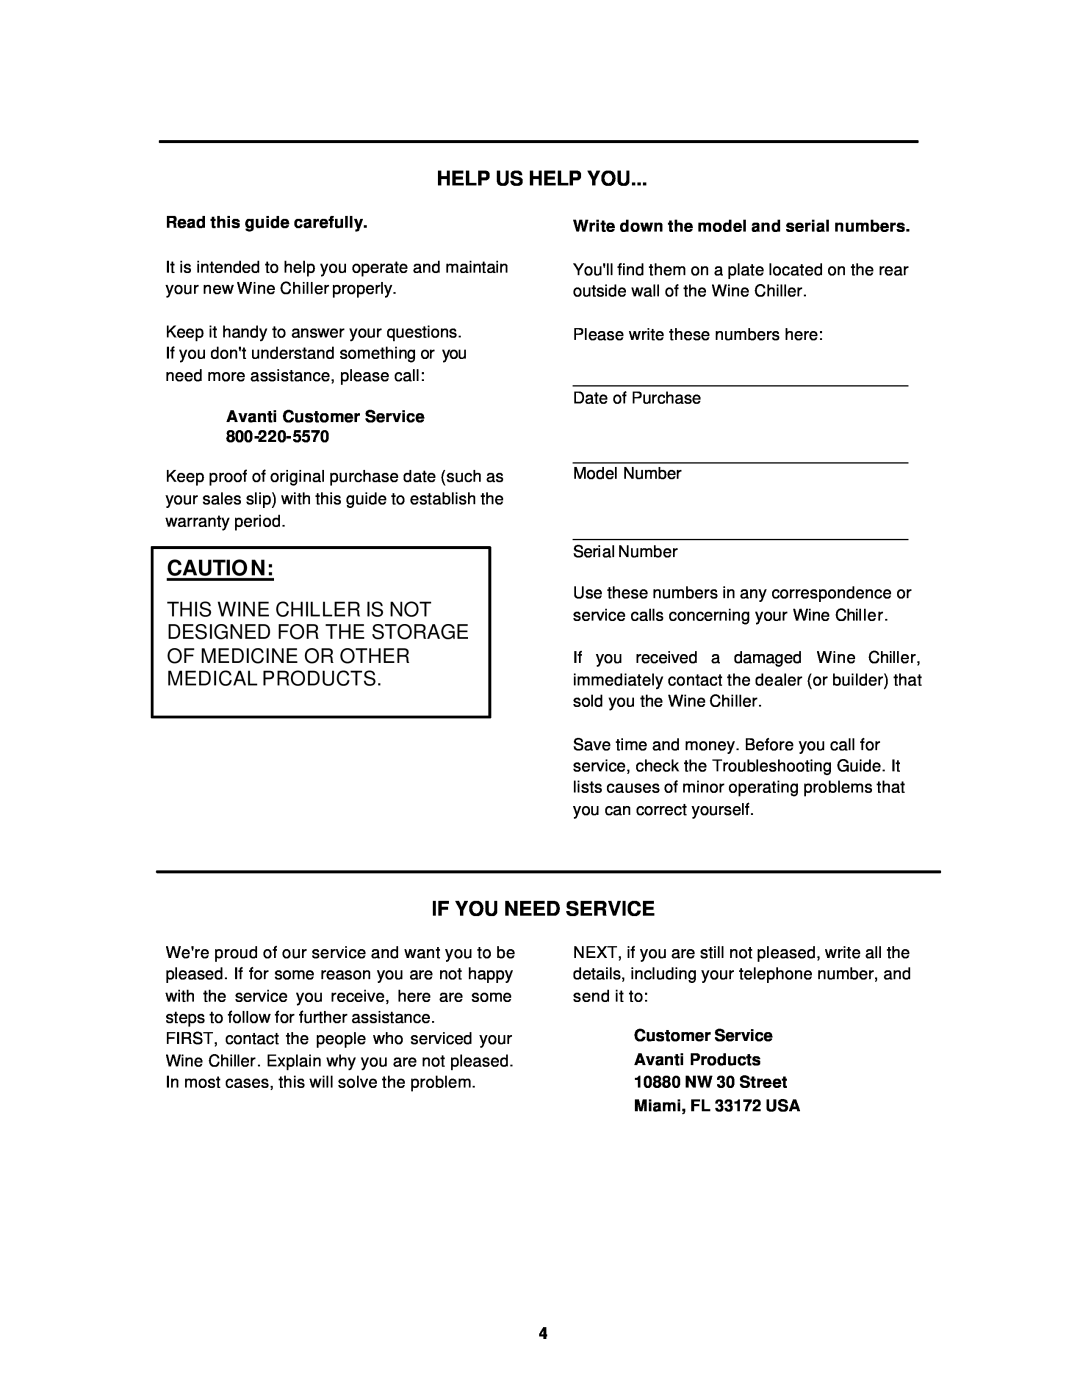 Avanti EWC12 instruction manual Help Us Help You, If You Need Service, Read this guide carefully, Avanti Customer Service 